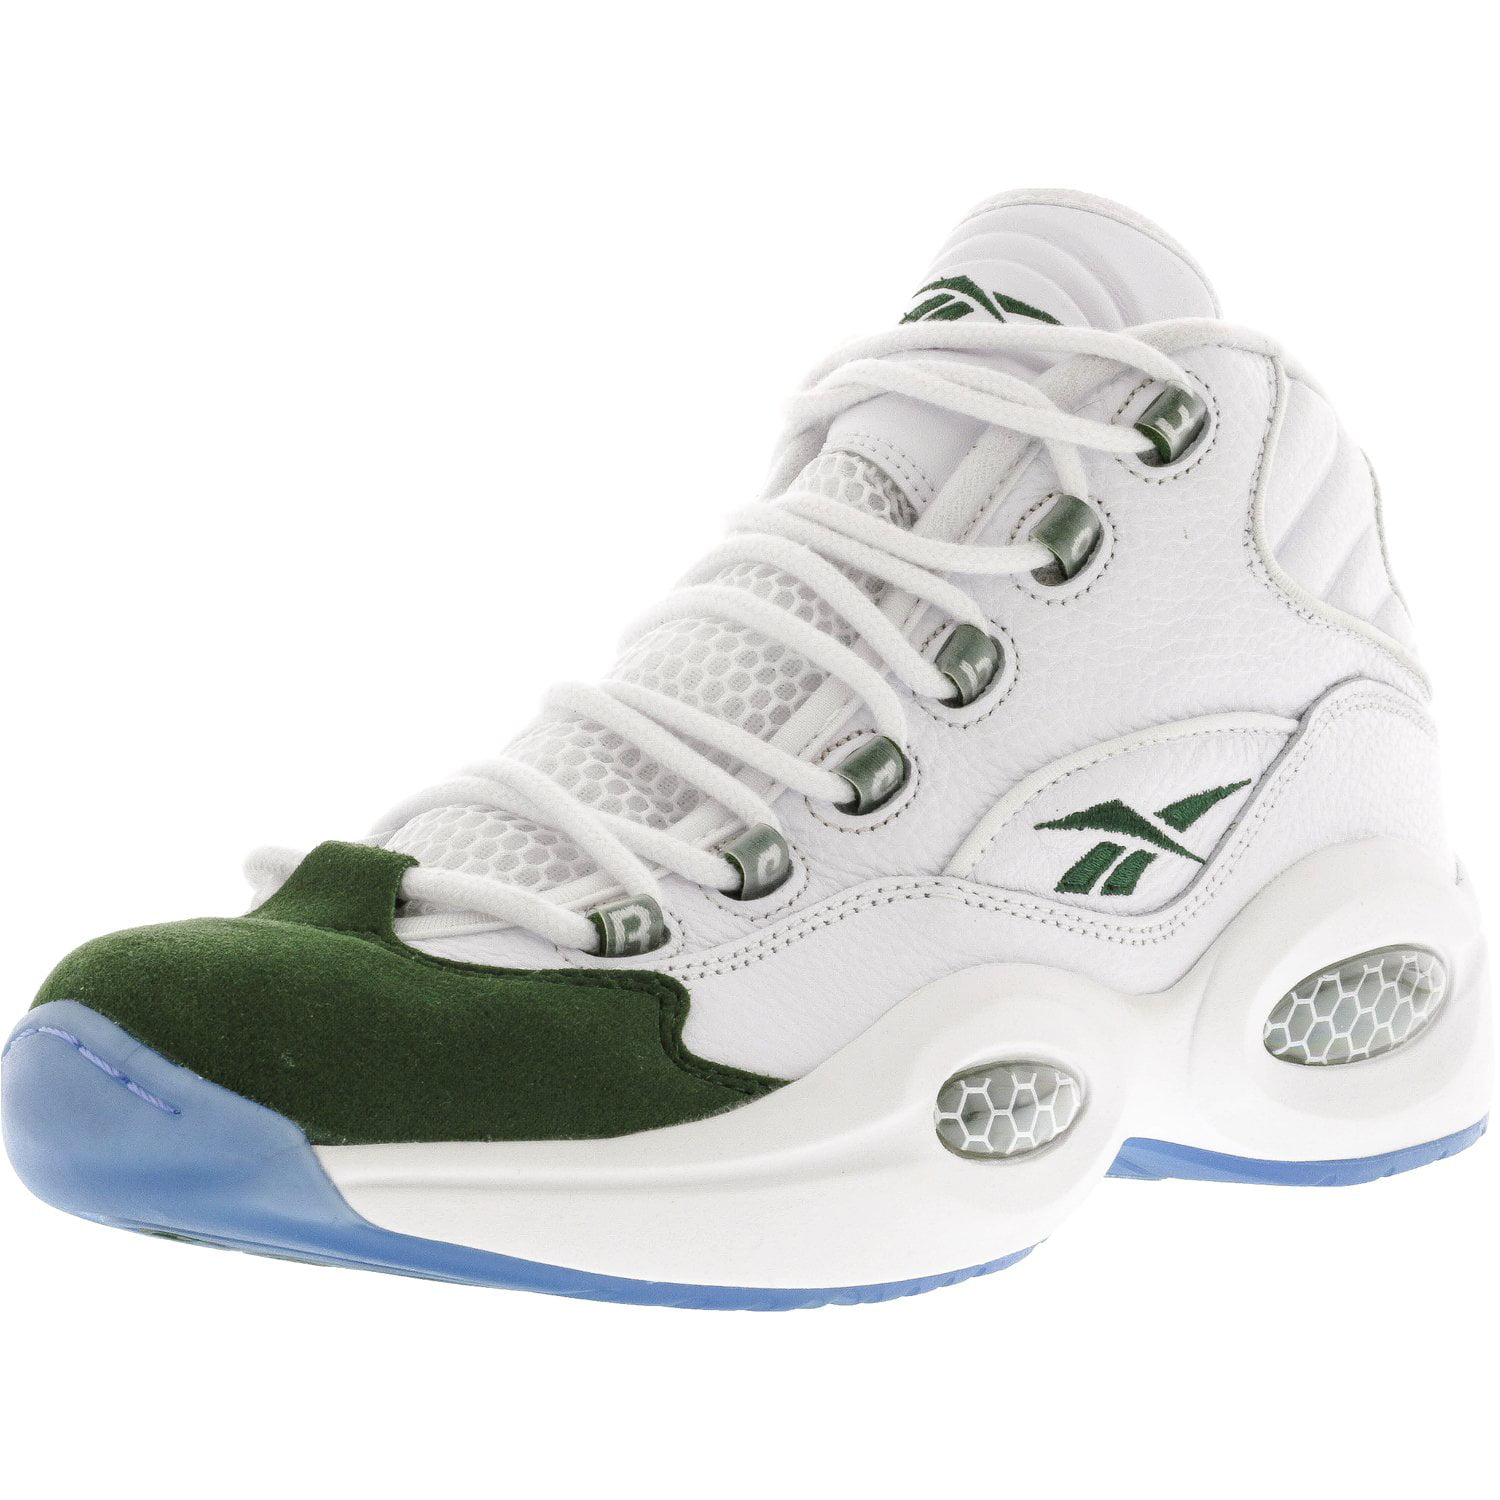 racing green shoes